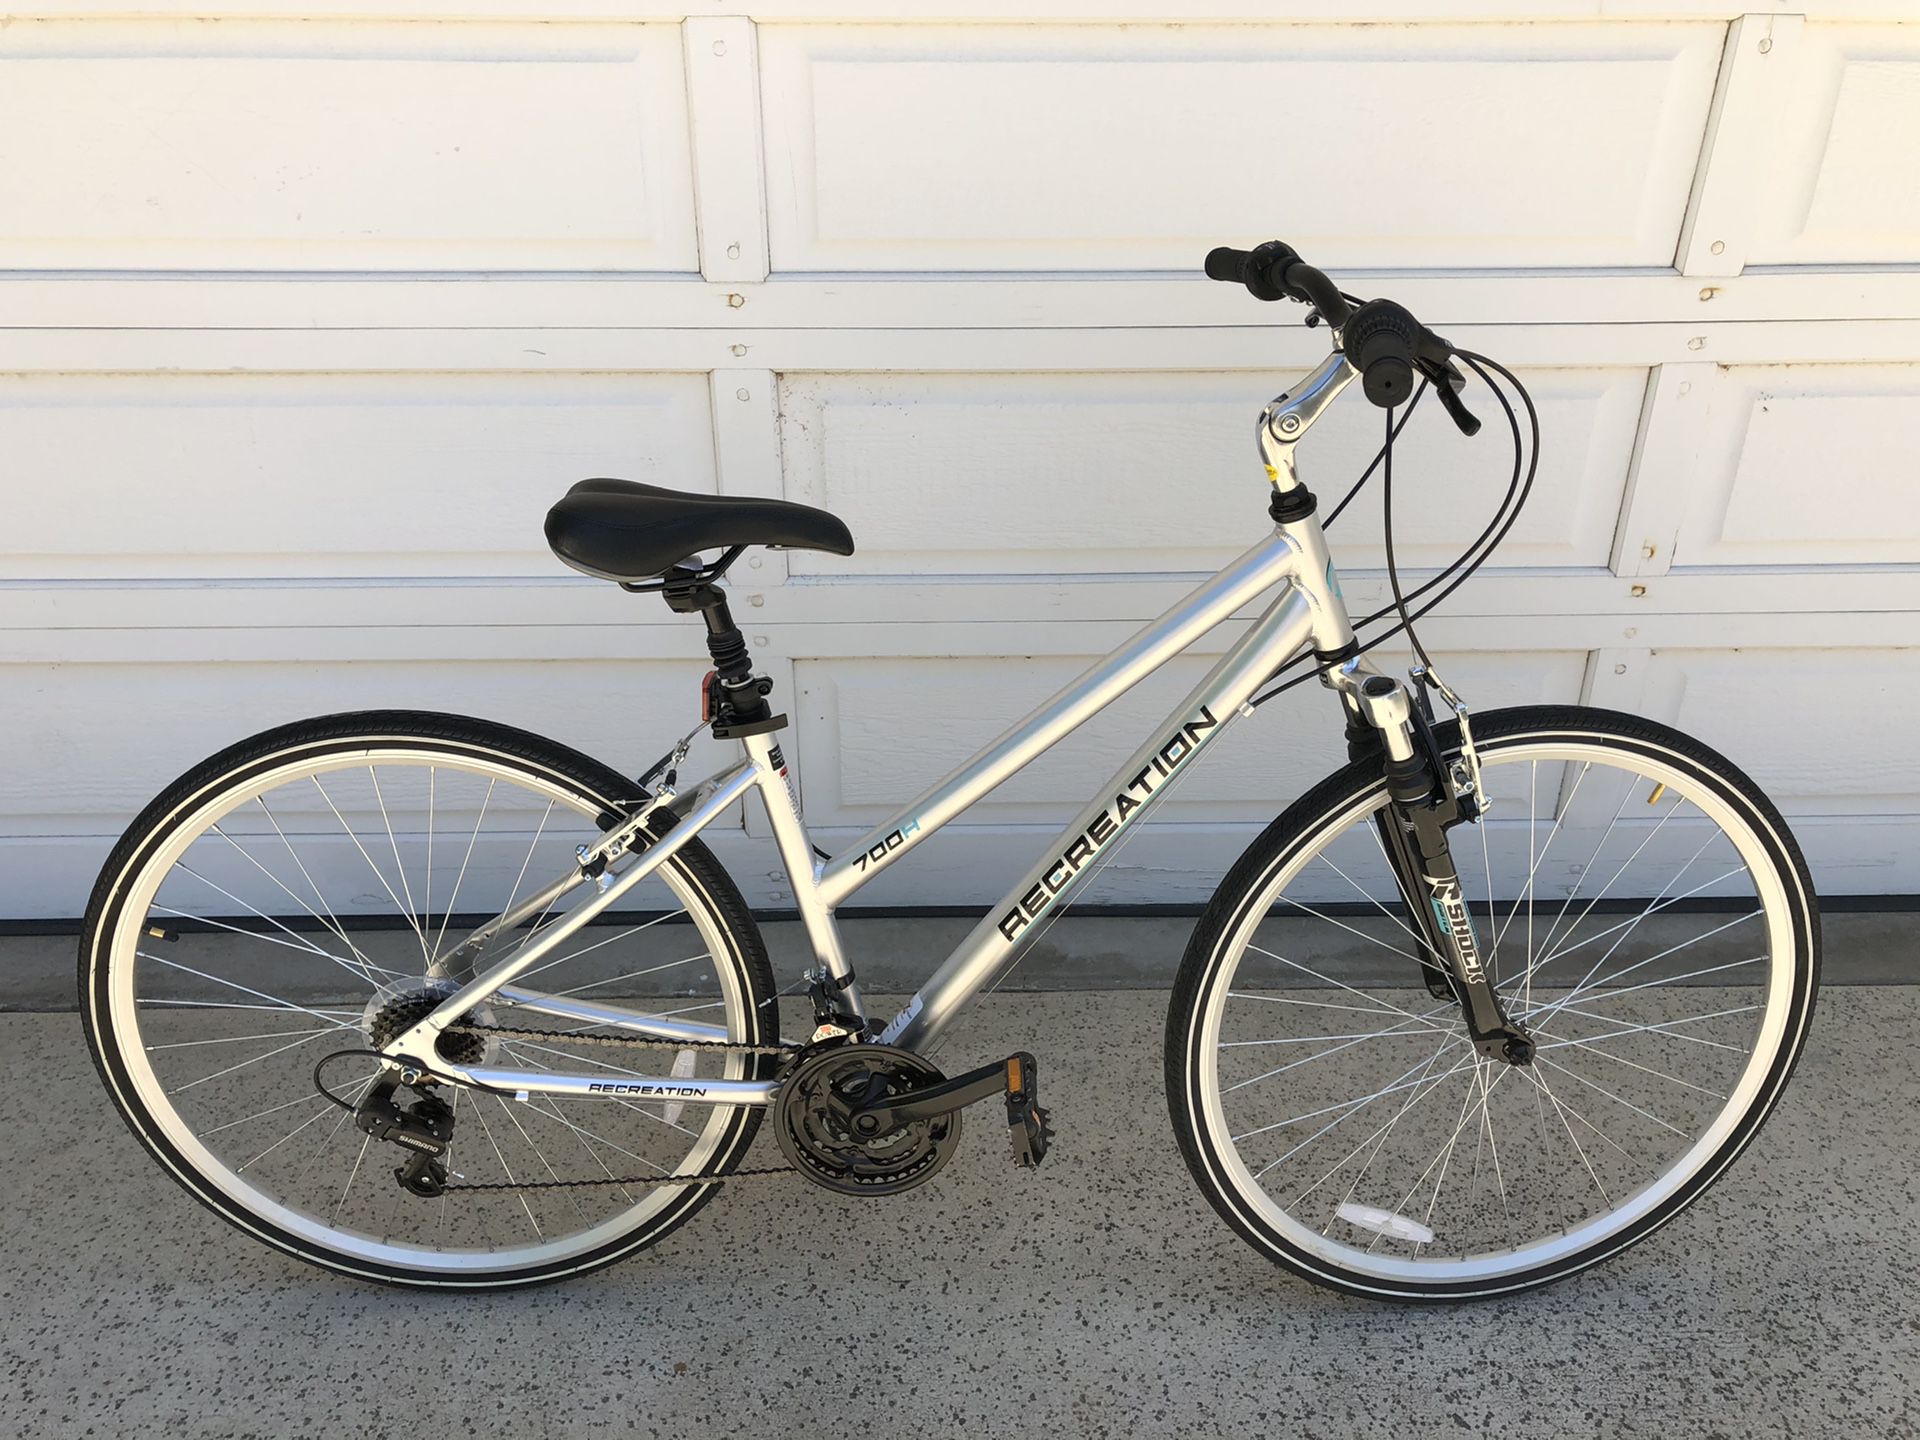 $150 Recreation 700H bike